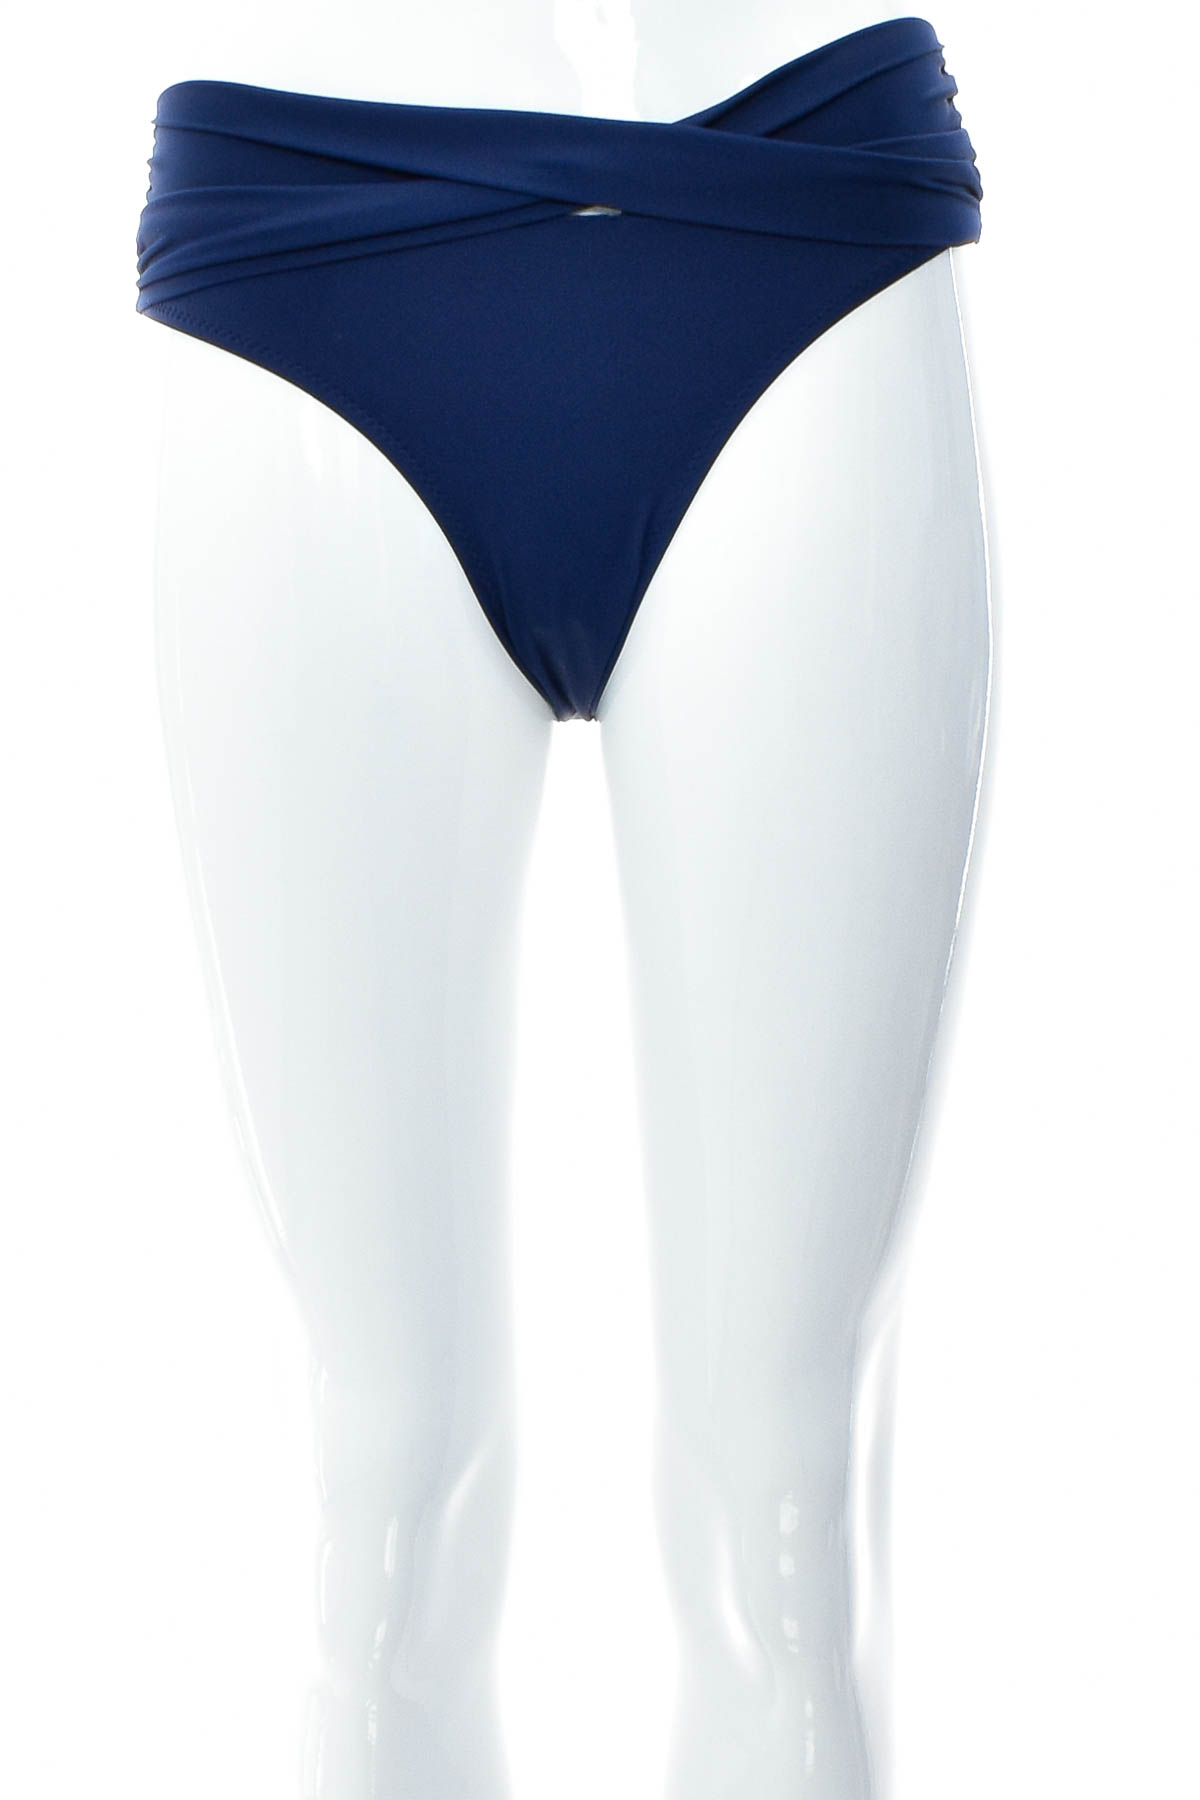 Women's swimsuit bottoms - ANNA FIELD - 0